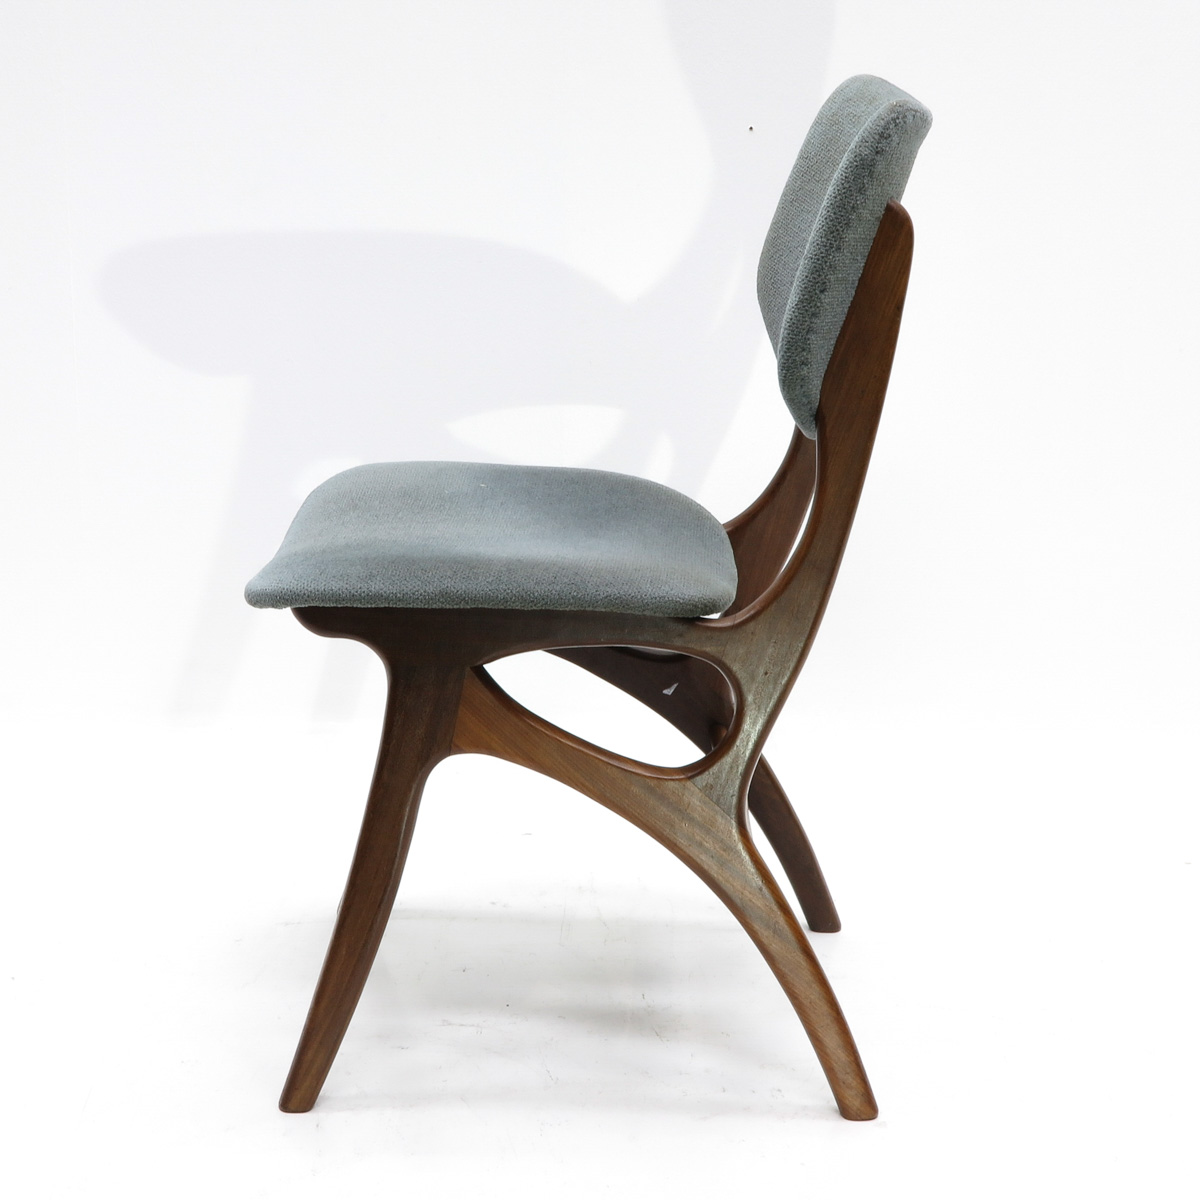 A Set of Four Louis v. Teeffelen Teak Design Chairs - Image 4 of 4